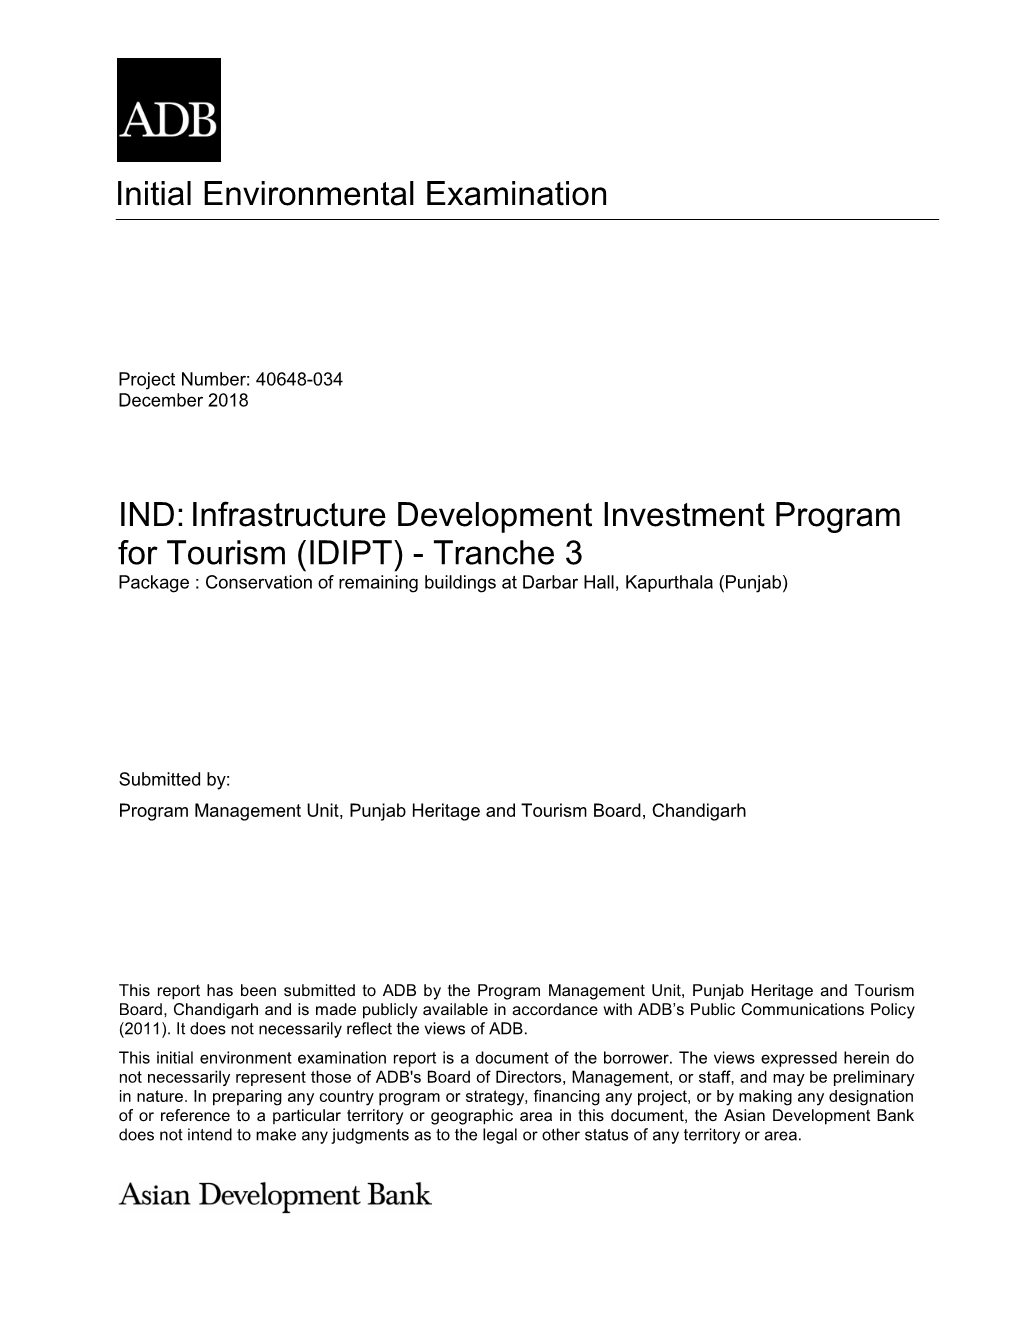 40648-034: Infrastructure Development Investment Program for Tourism